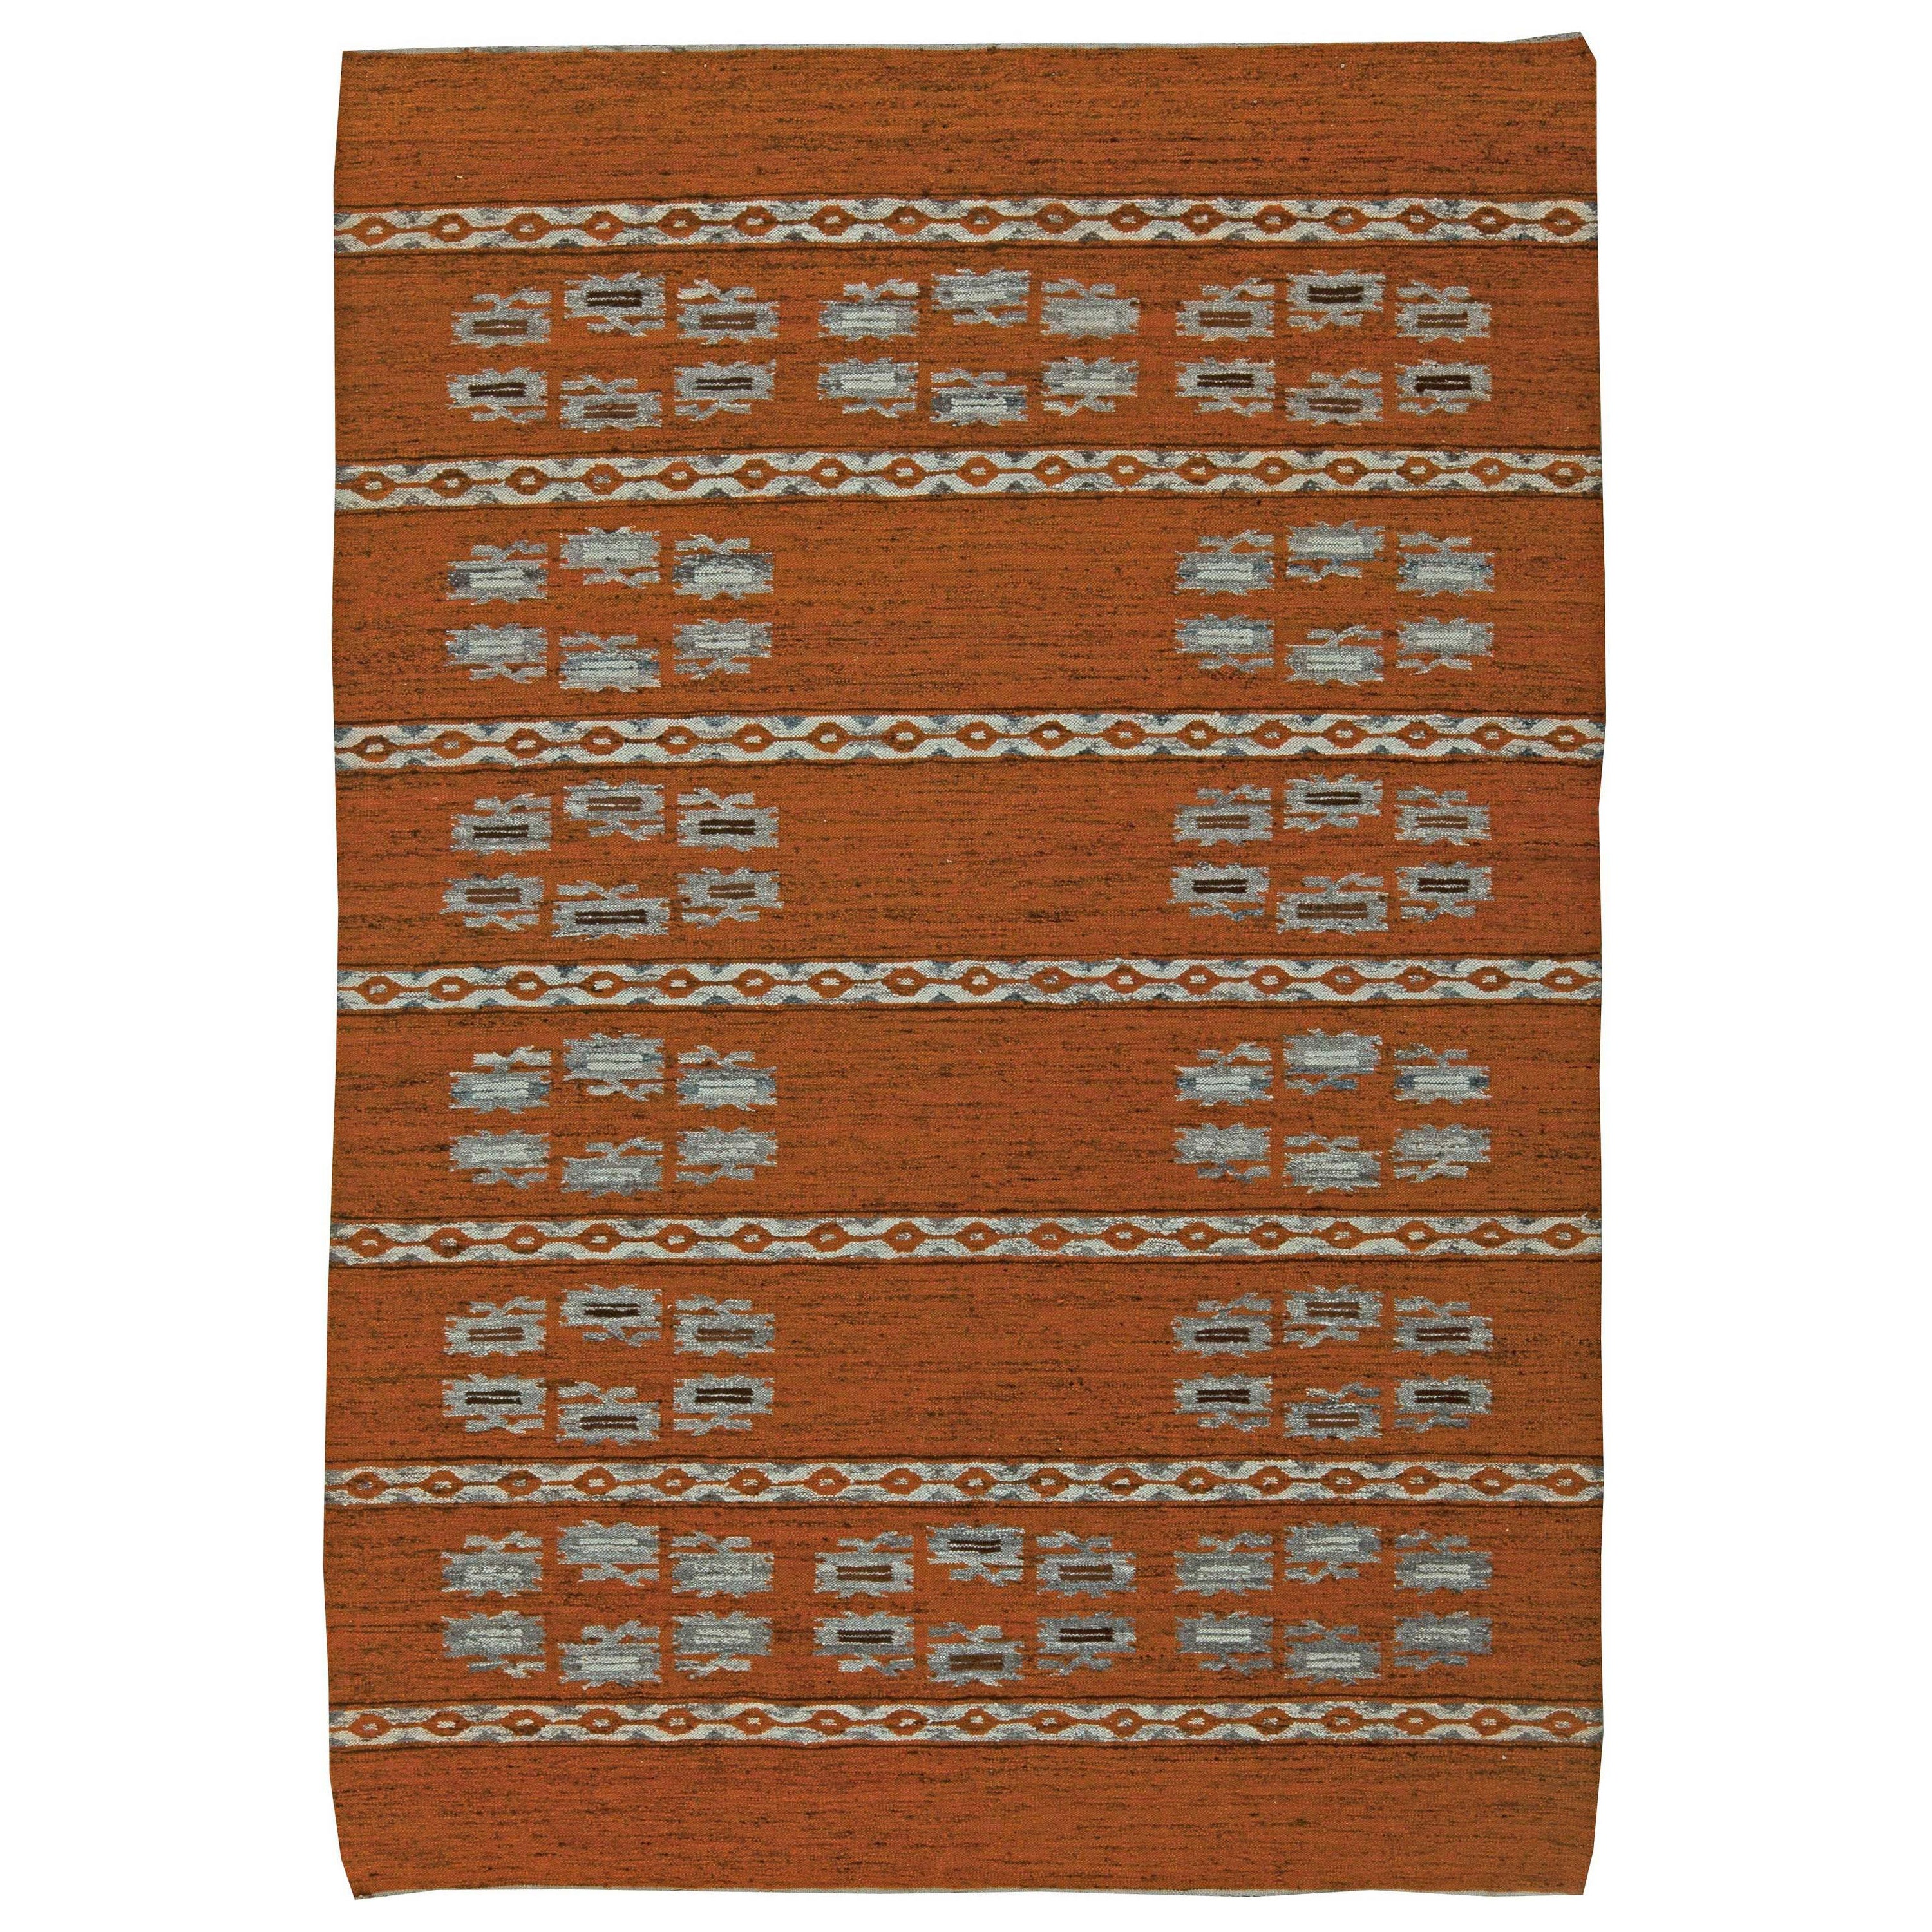 Mid-20th century Swedish Brown Flat-Weave Wool Rug